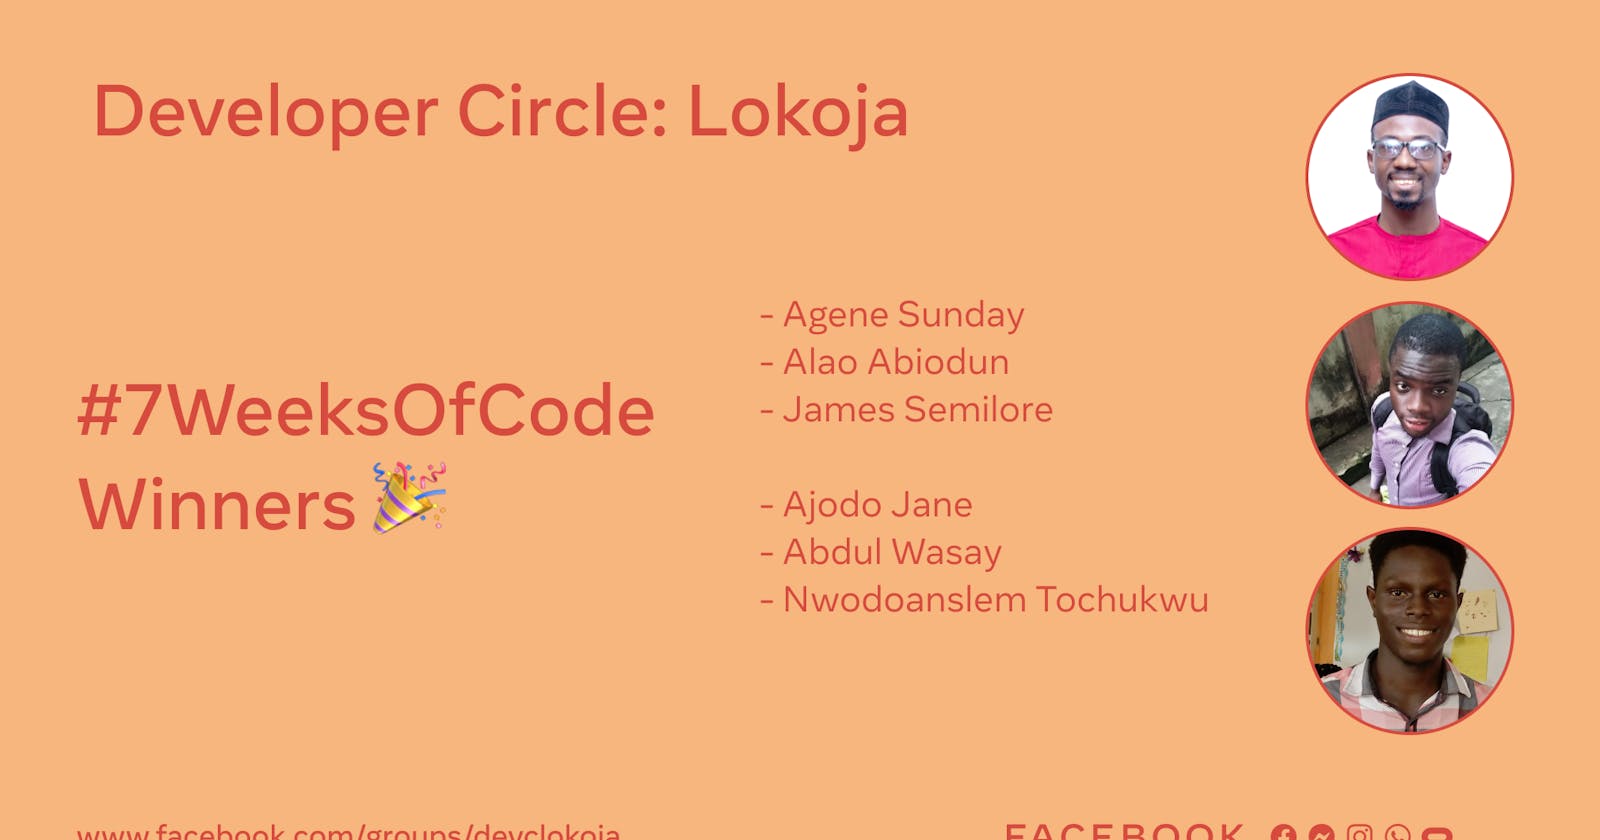 #DevCLokoja7WeeksOfCode Winners